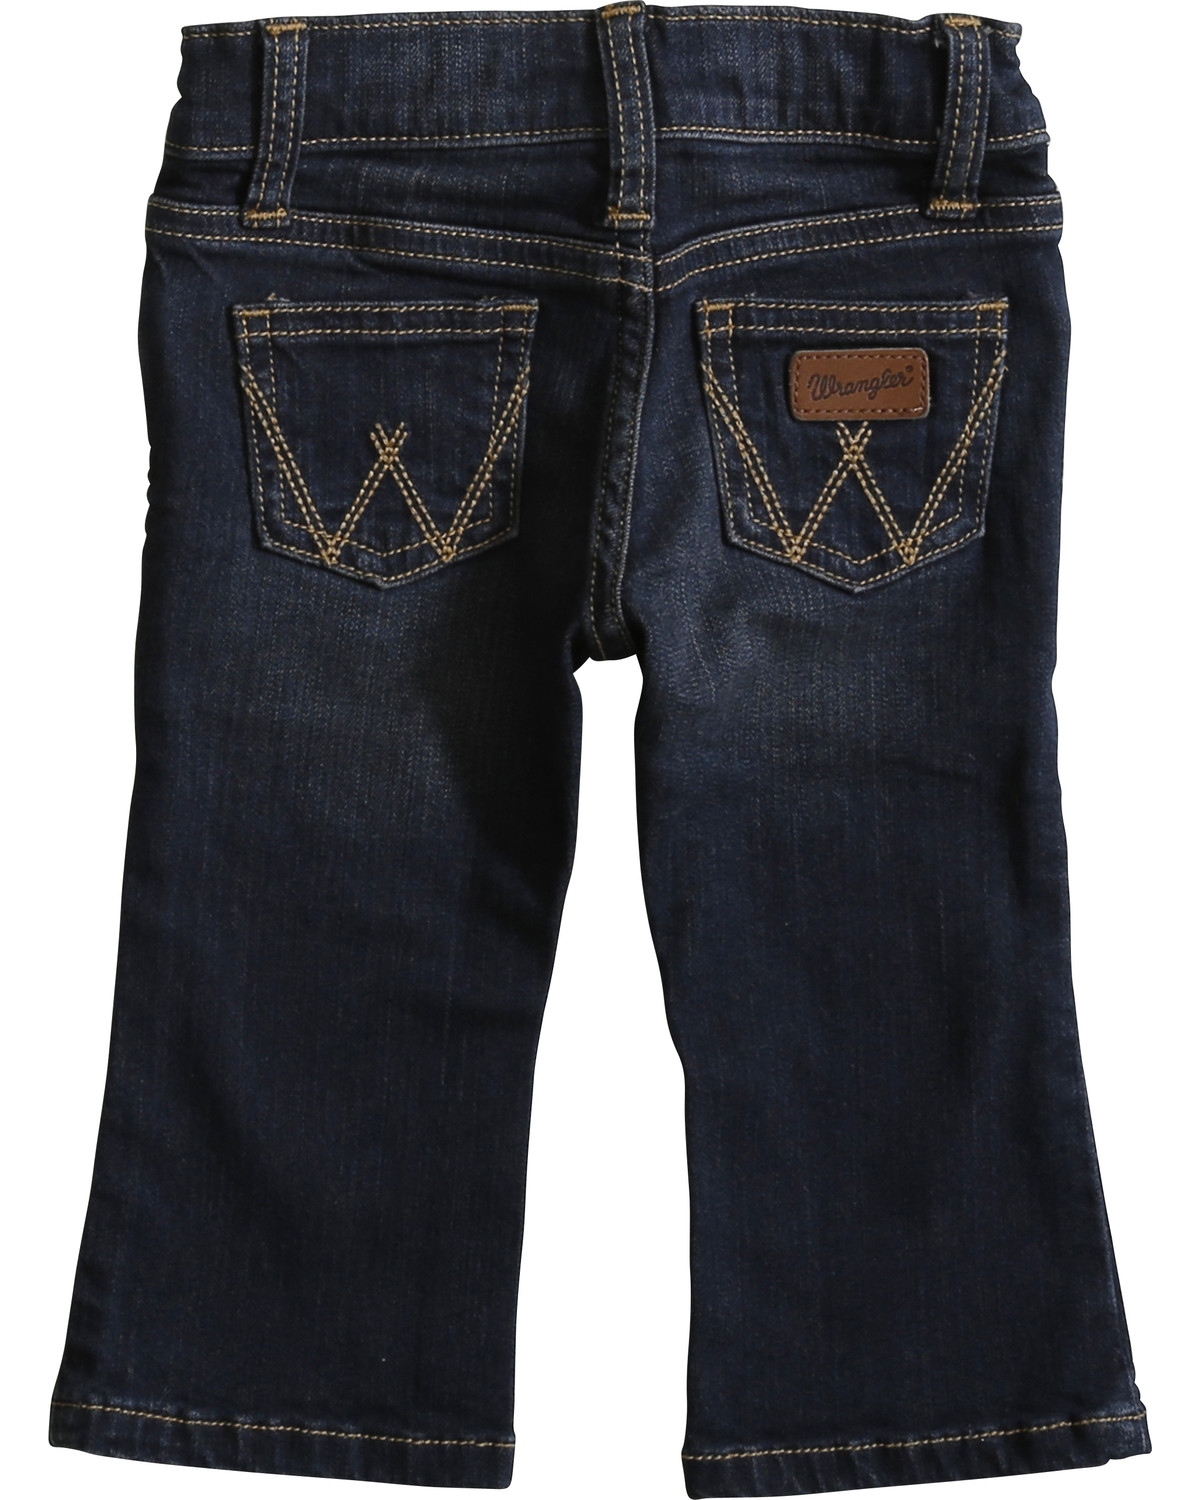 Wrangler Infant Boys' Dark Wash Jeans